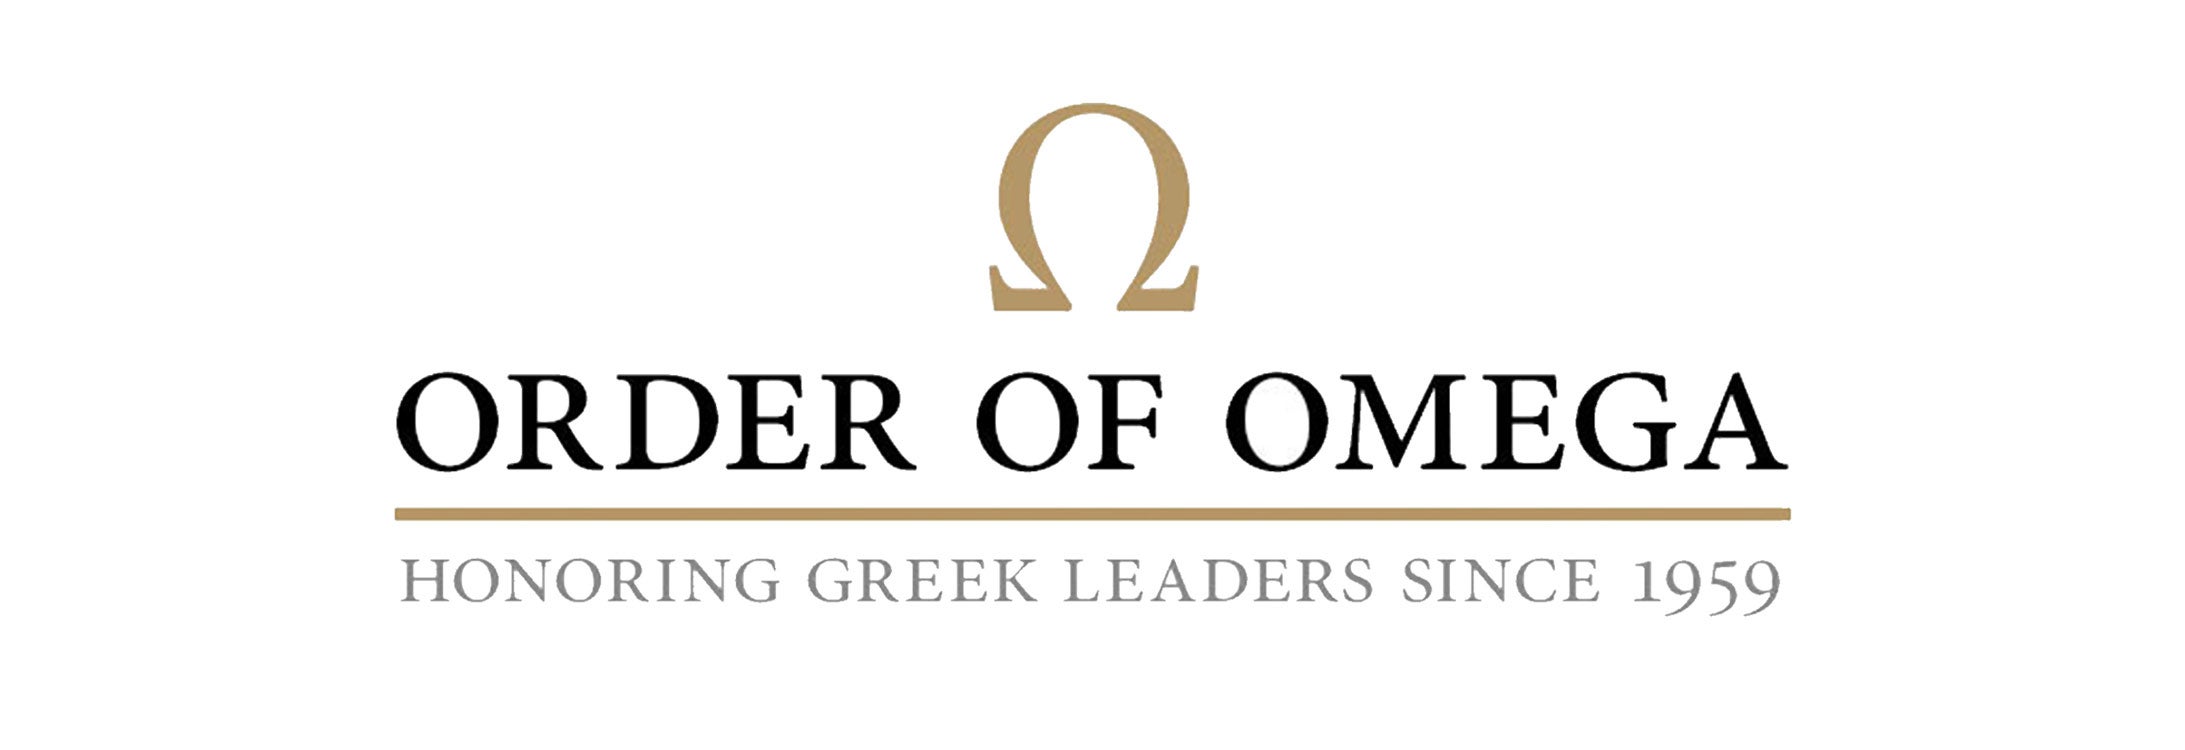 Order of Omega - Honoring Greek Leaders Since 1959